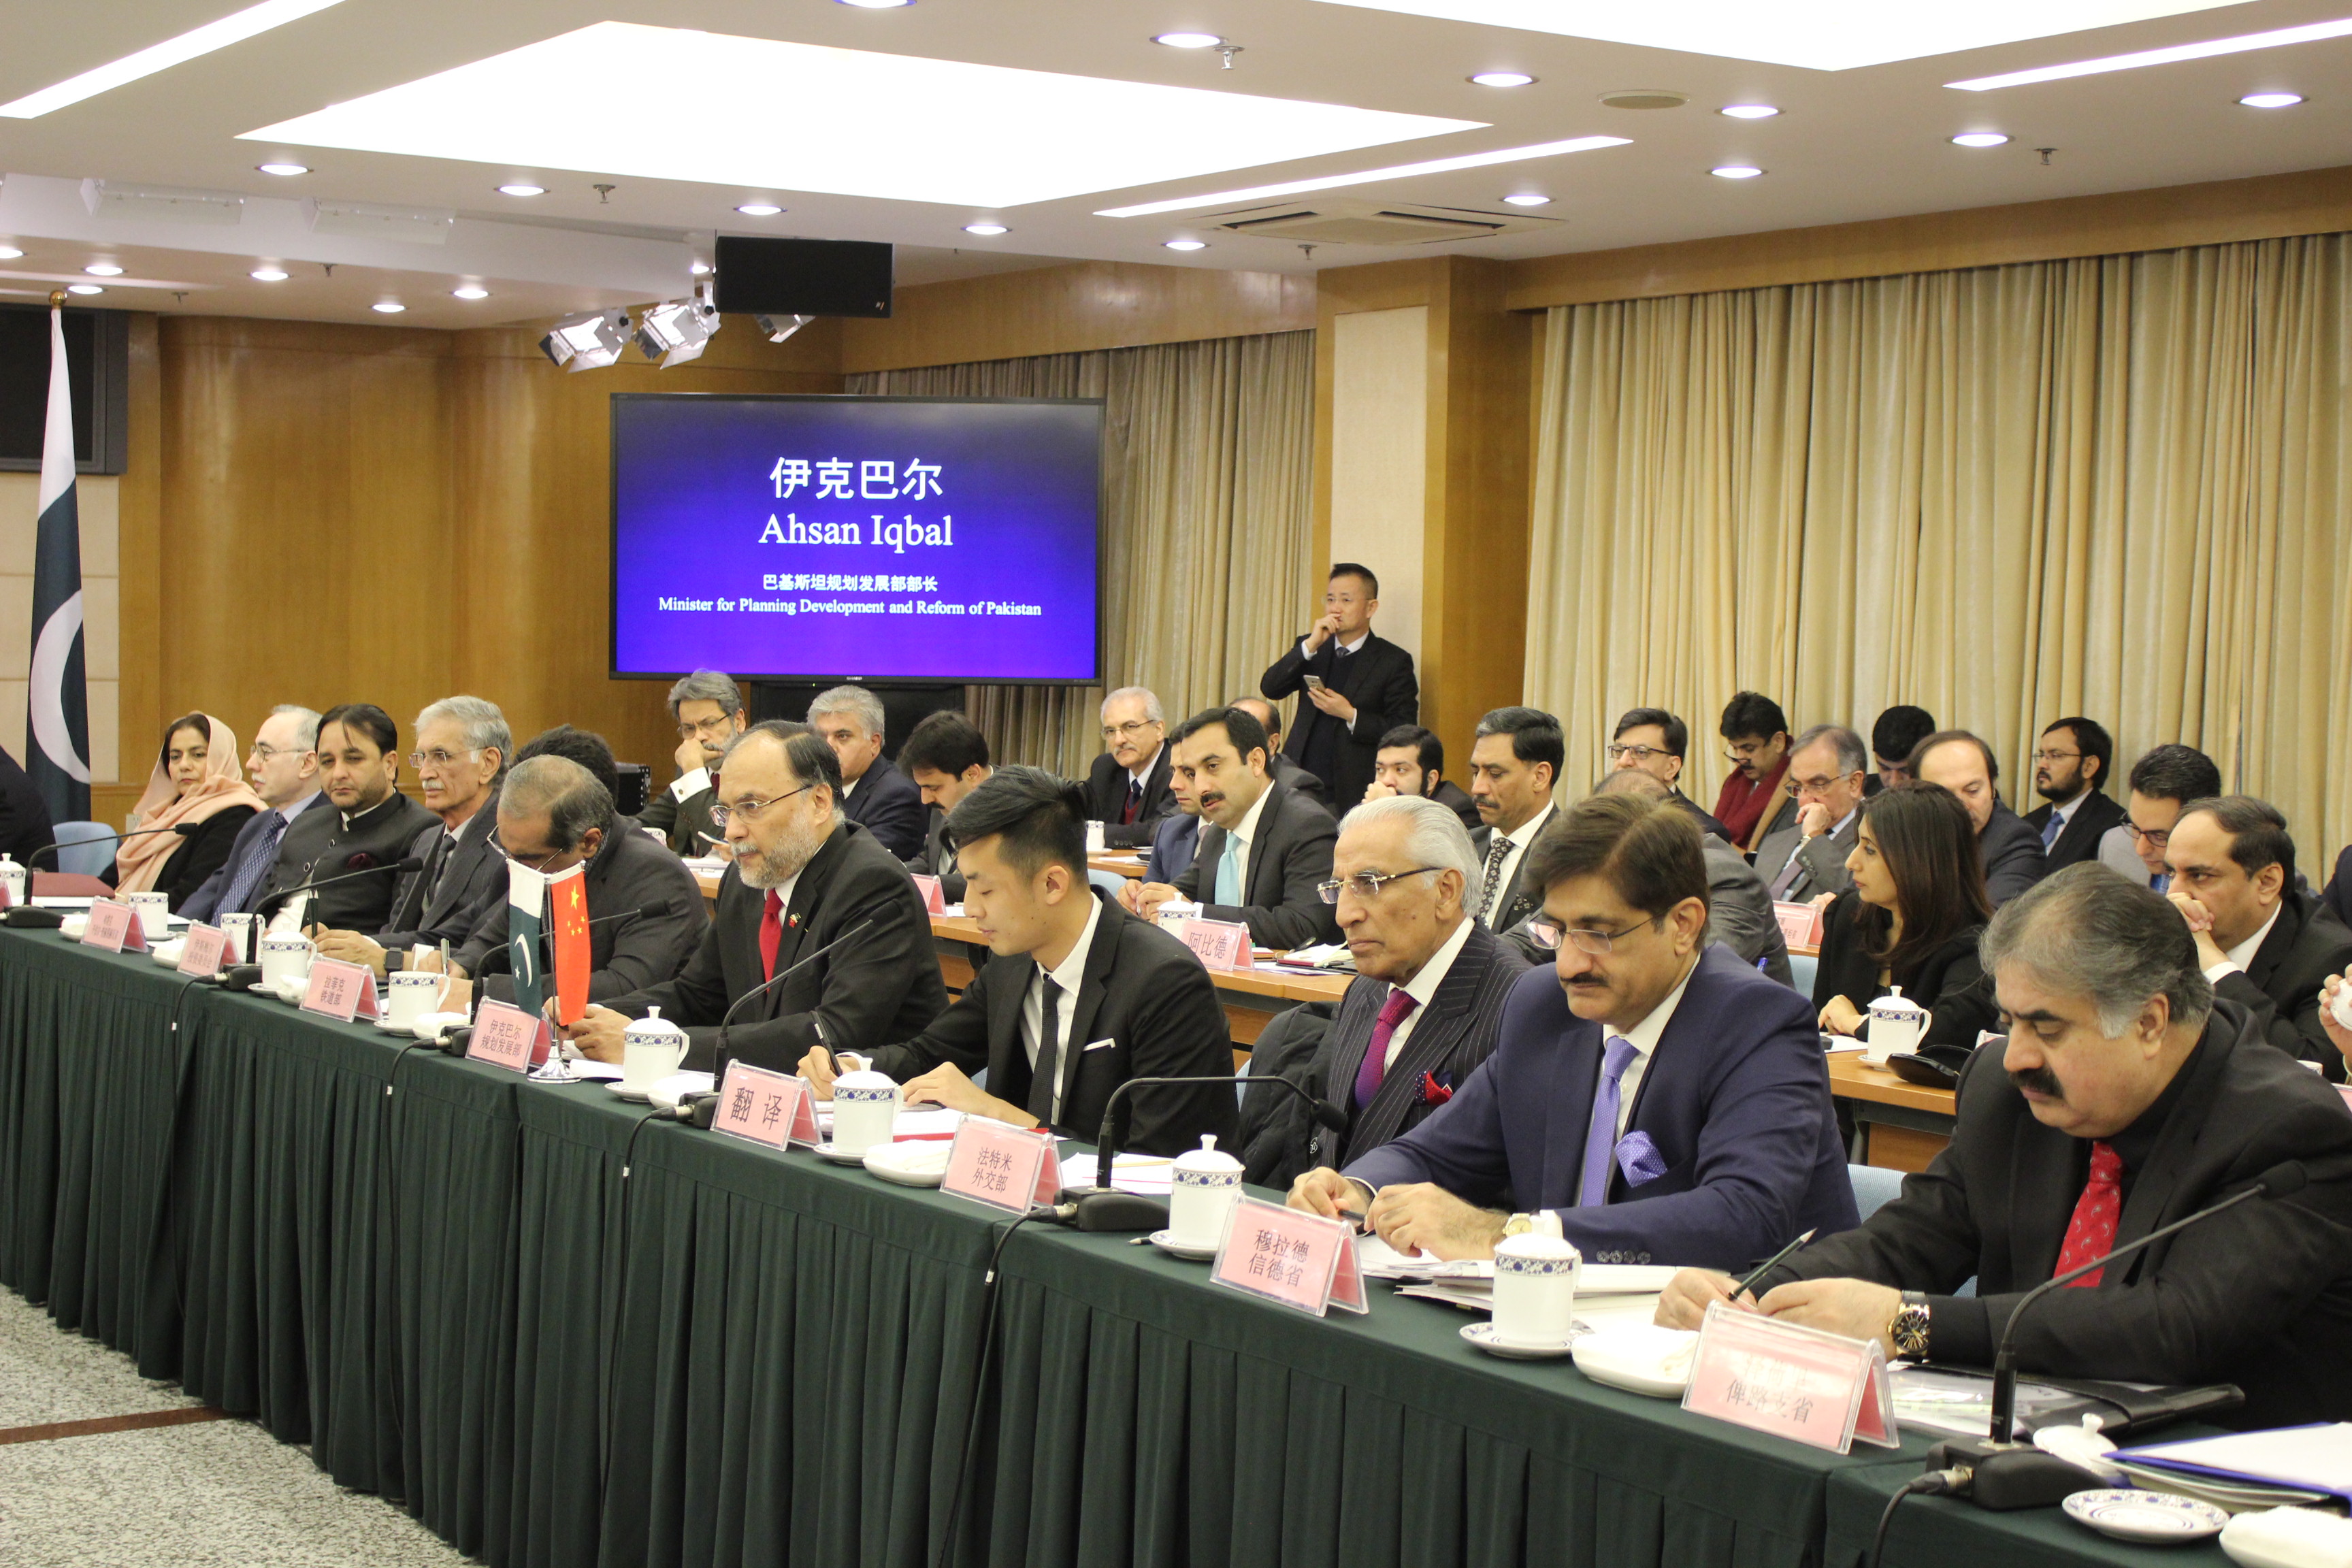 6th JCC Meeting at Beijing, China on 29 December 2016